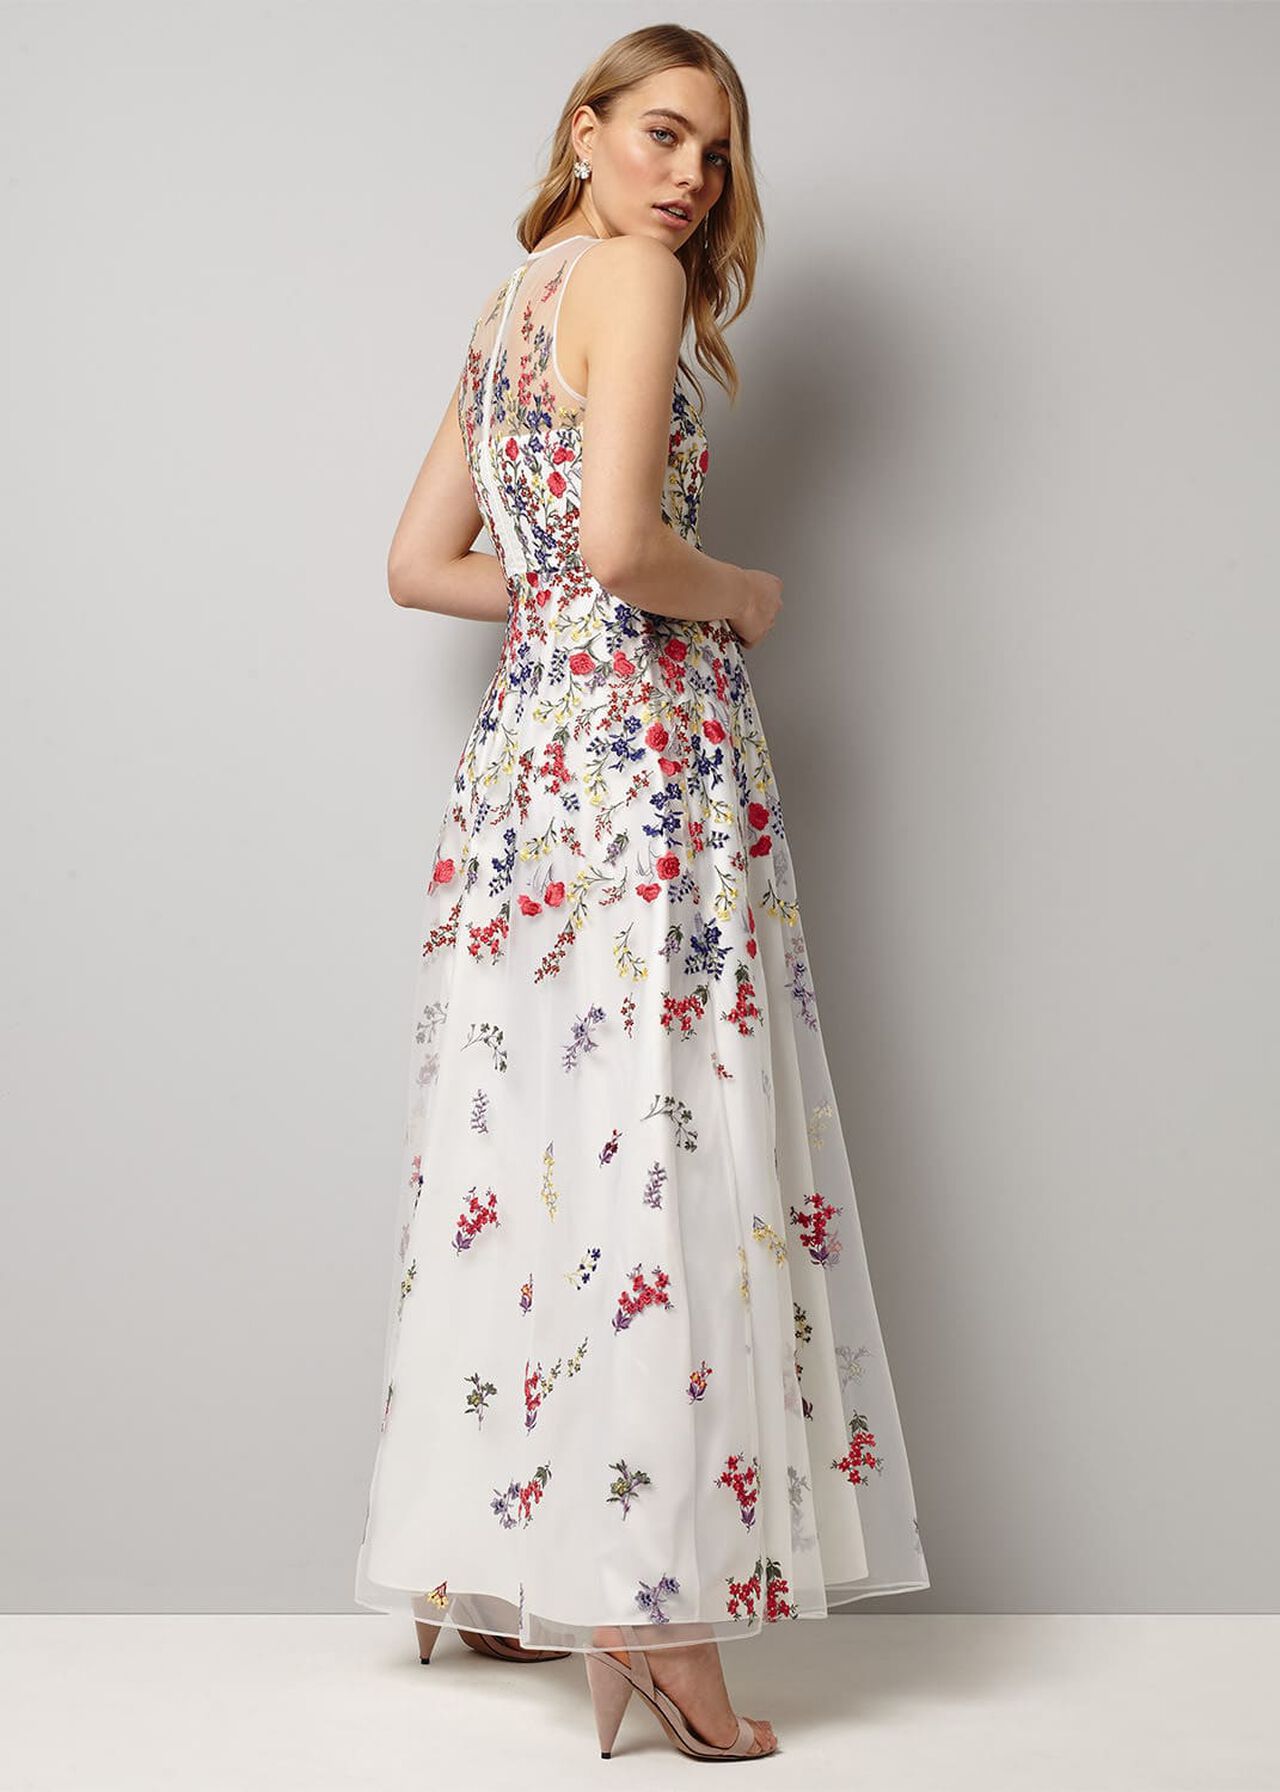 Anastacia Embroidered Maxi Dress